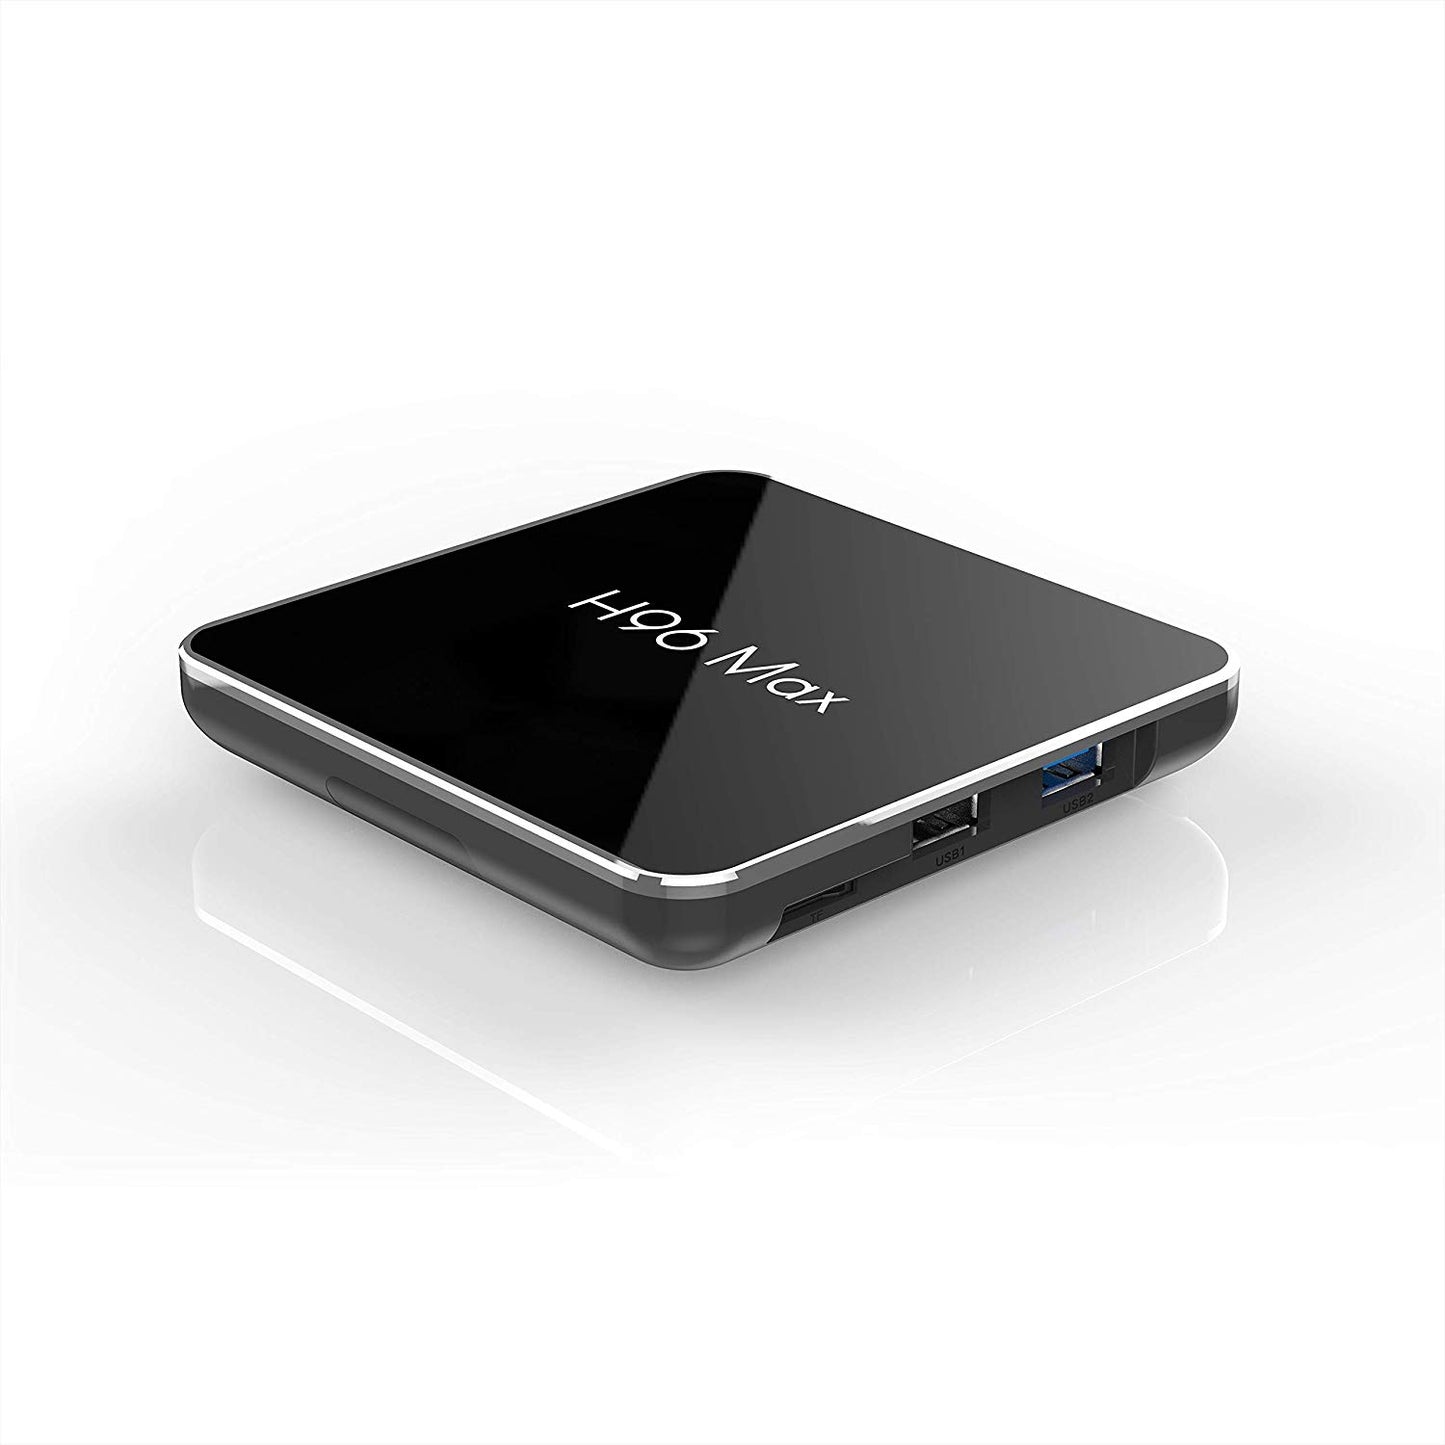 H96 MAX X2 Amlogic S905X2 4GB RAM 64GB ROM 5G WiFi USB 3.0 4K Android 8.1 Voice Control TV Box